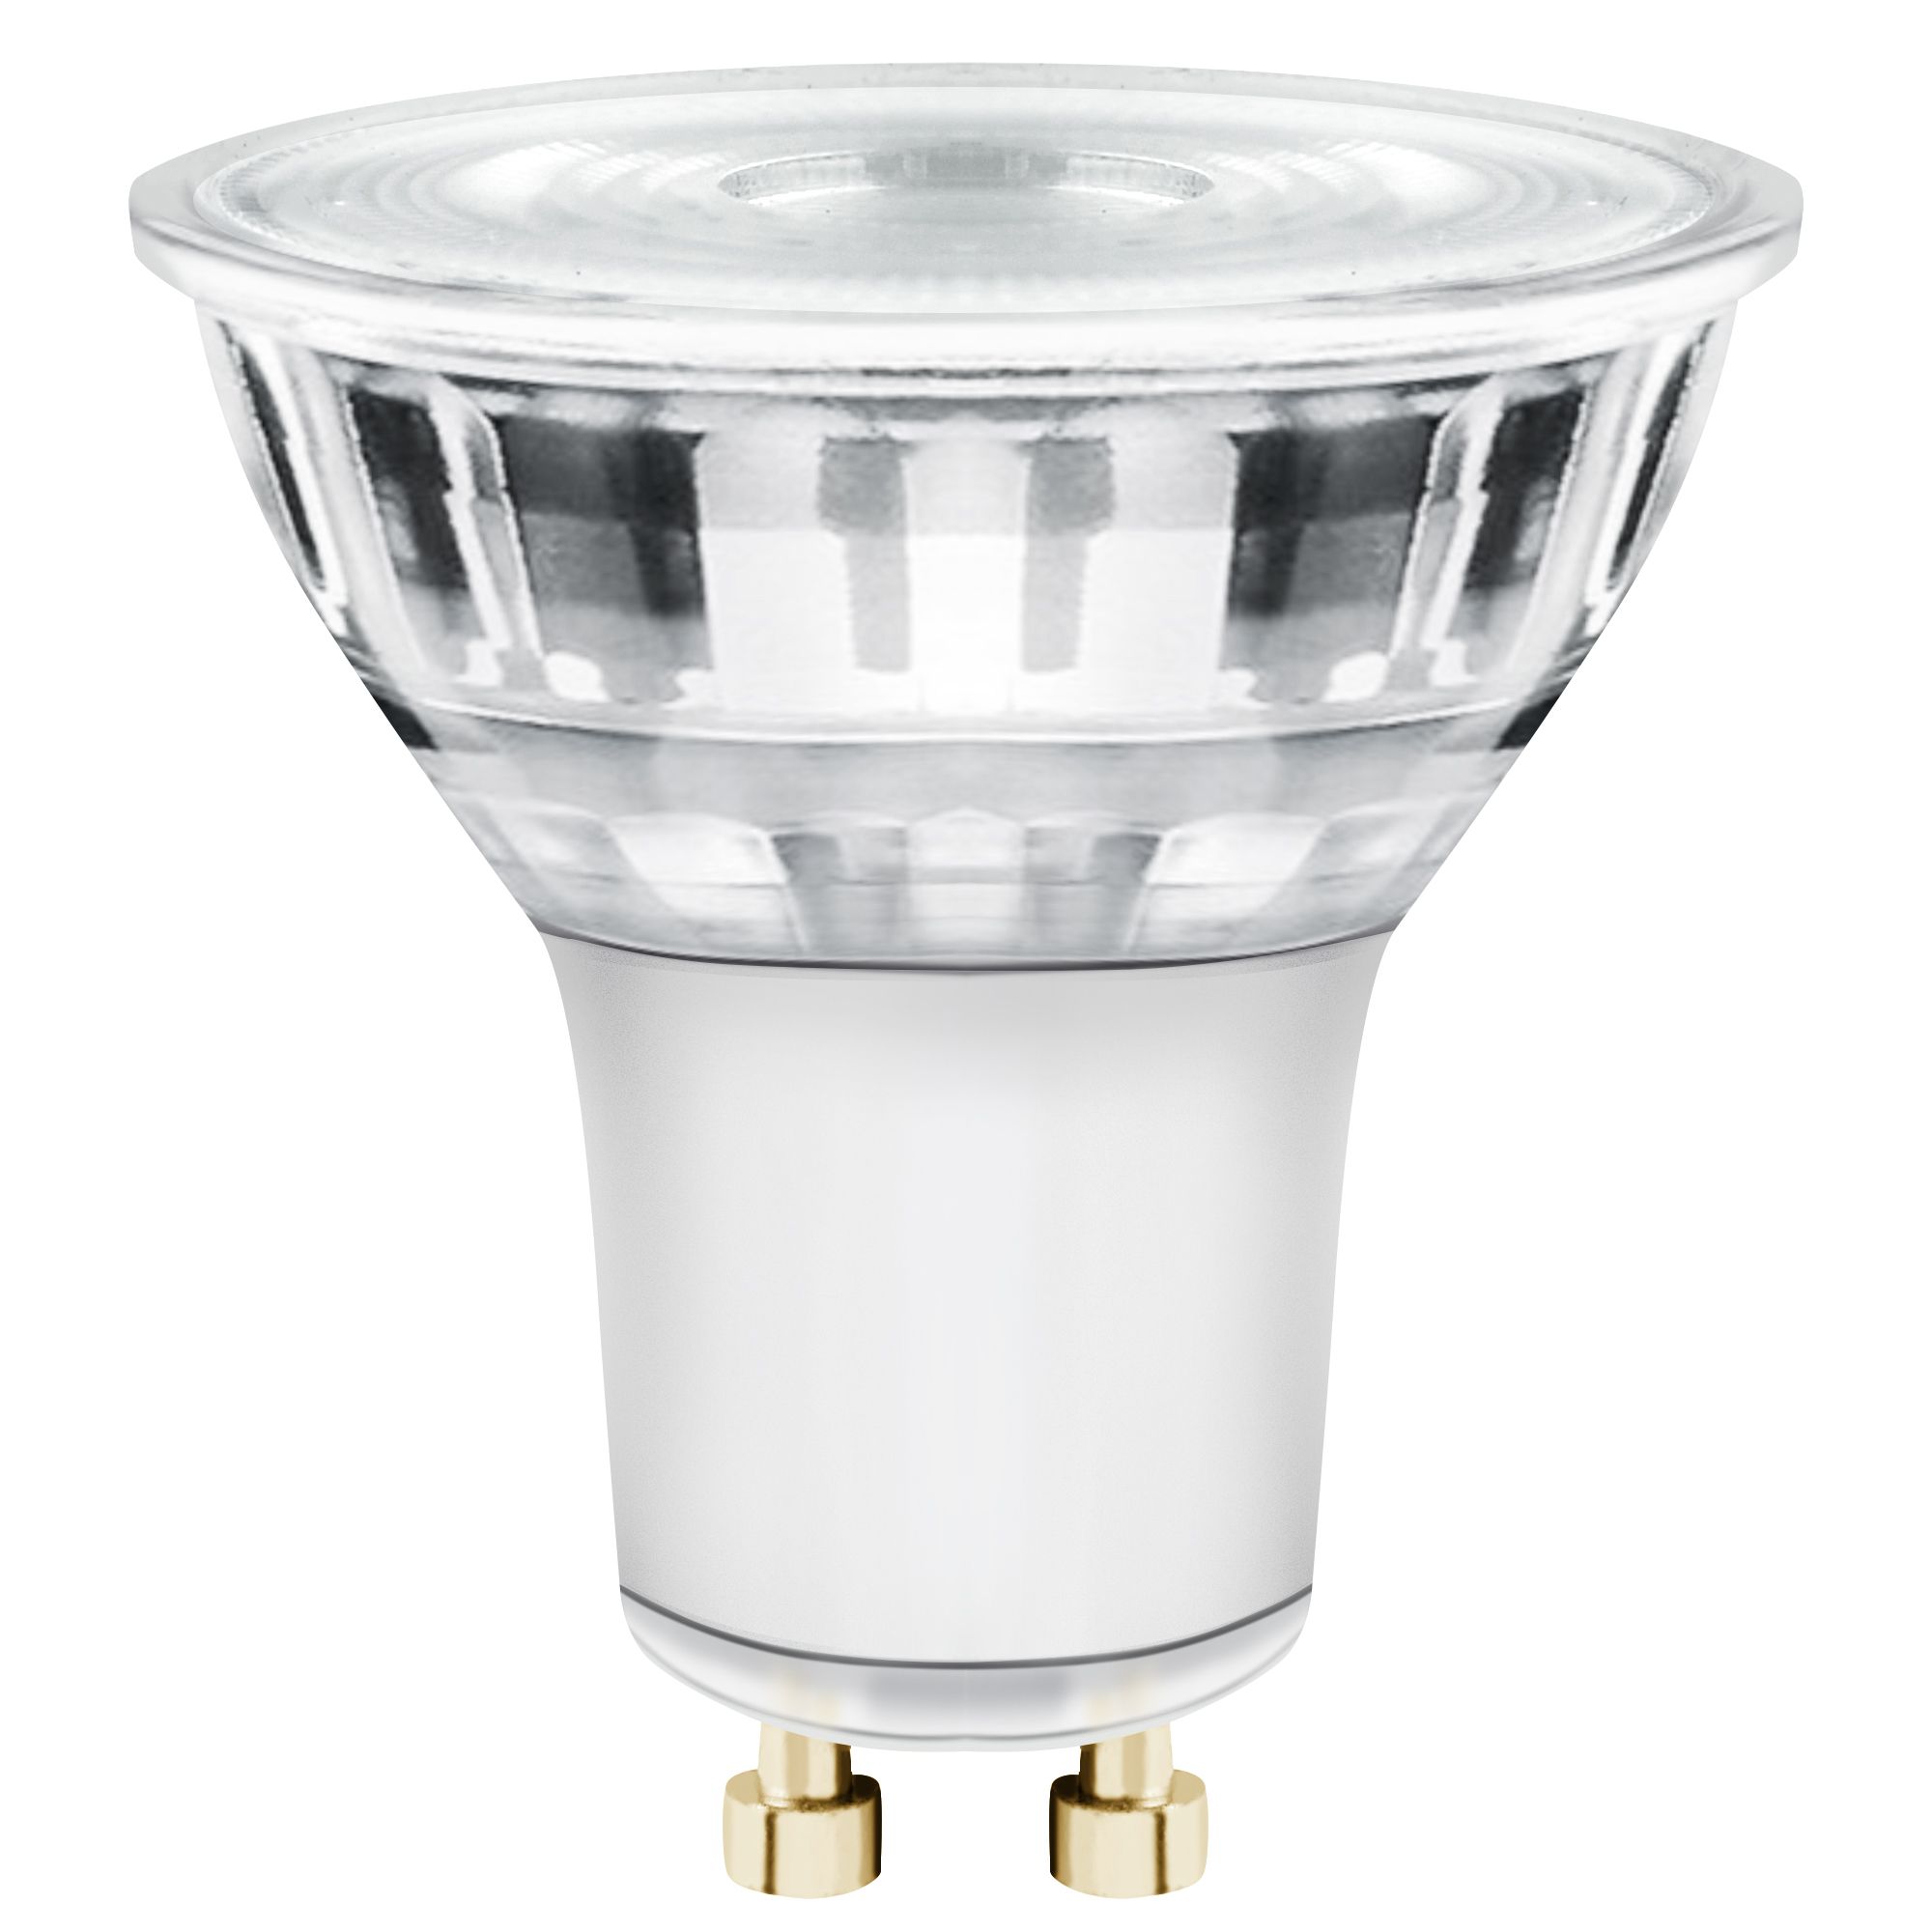 Diall Narrow beam GU10 5W 345lm Reflector Cold white LED Light bulb | DIY  at B&Q